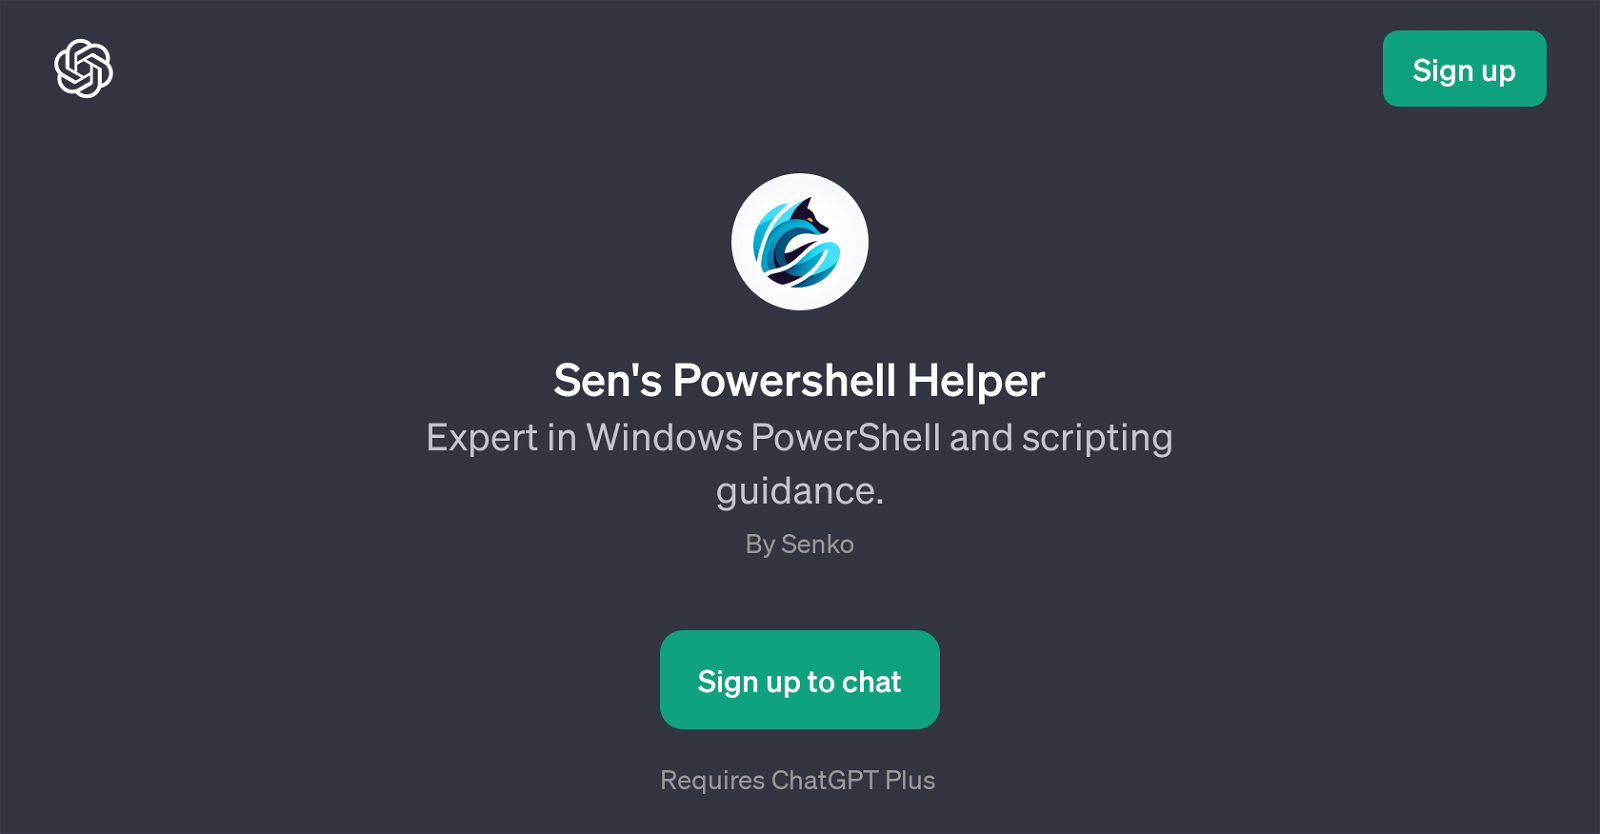 Sen's Powershell Helper website